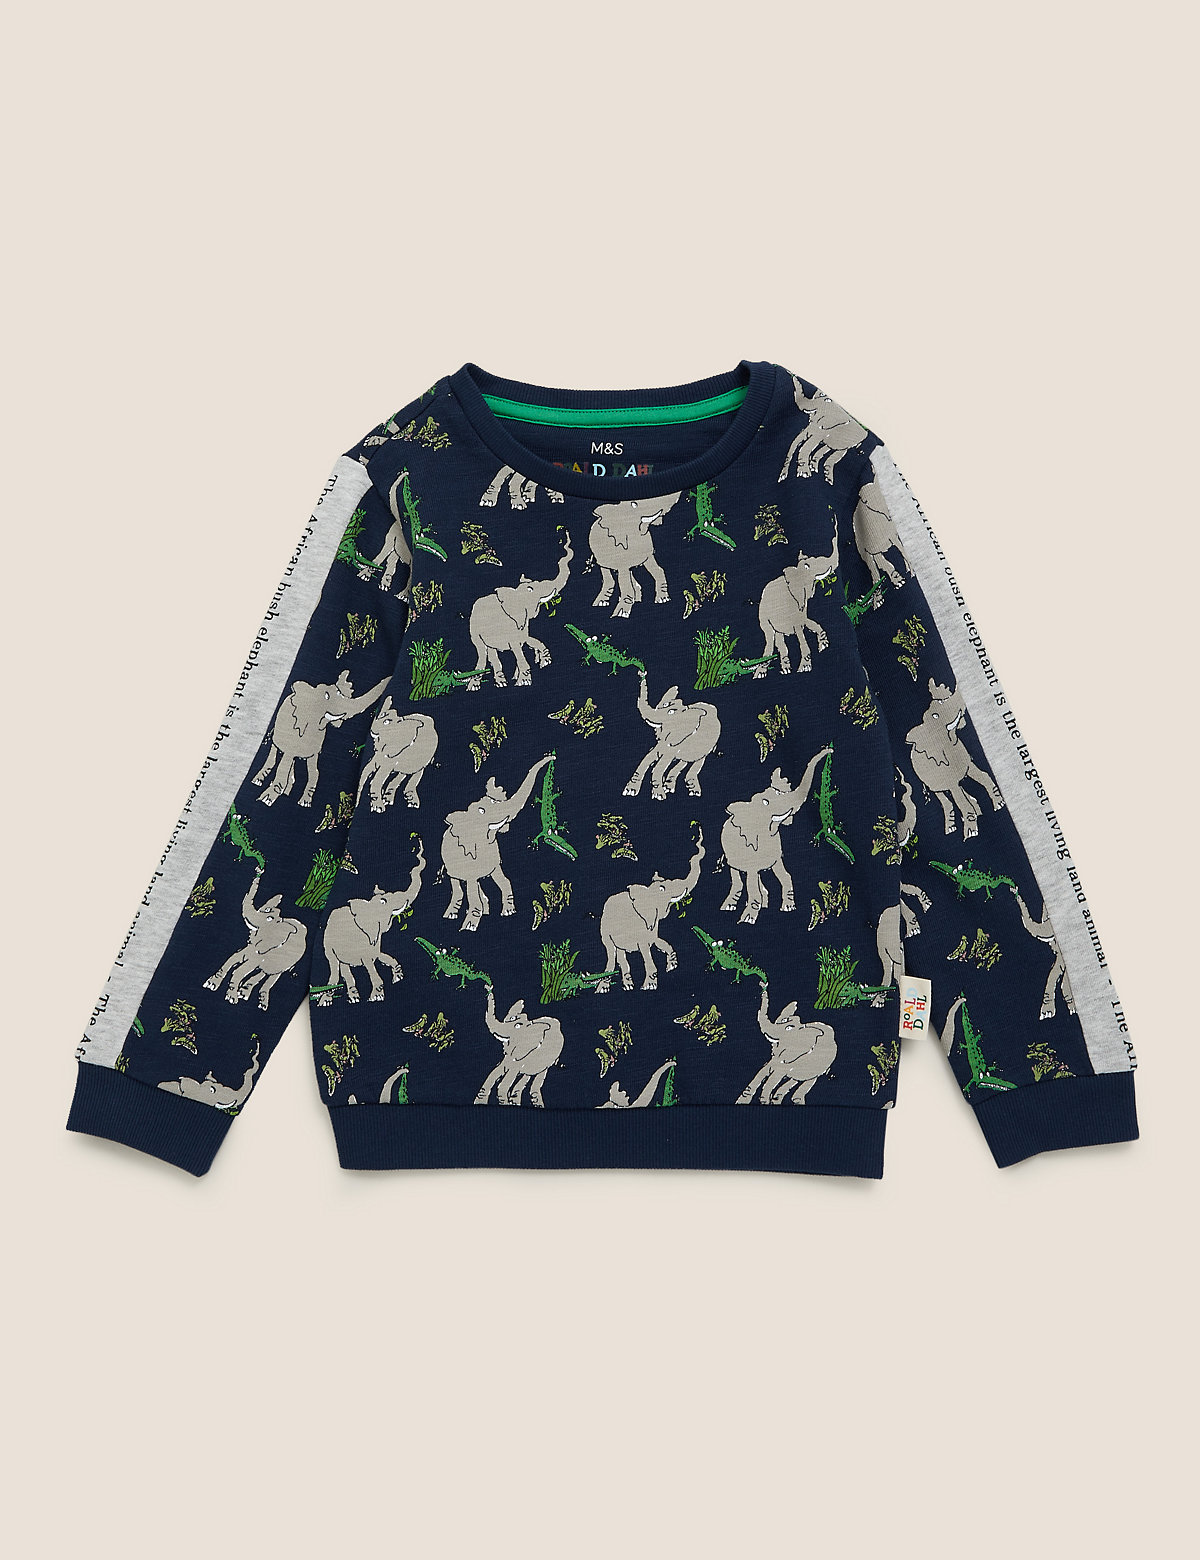 Roald Dahl™ & NHM™ Elephant Sweatshirt